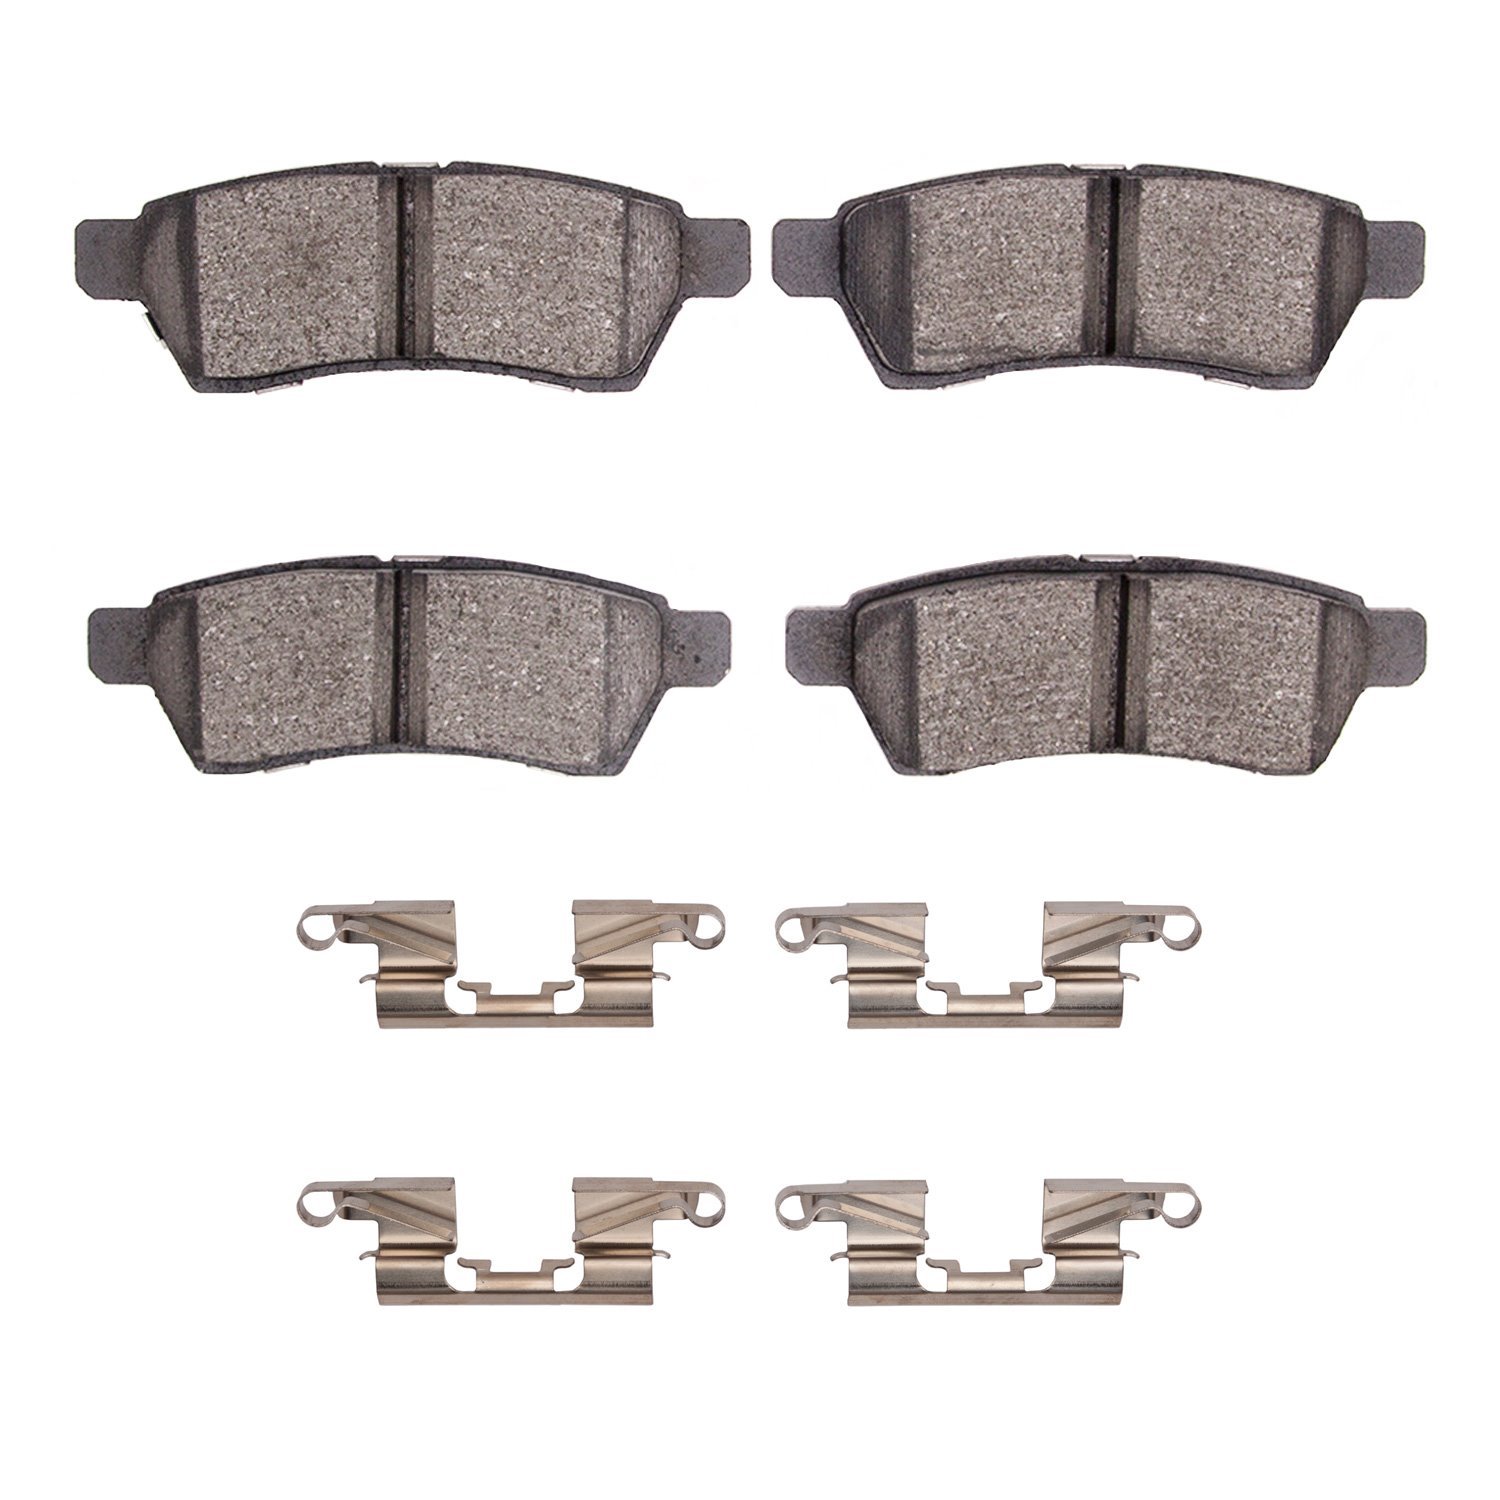 1311-1100-01 3000-Series Semi-Metallic Brake Pads & Hardware Kit, Fits Select Multiple Makes/Models, Position: Rear